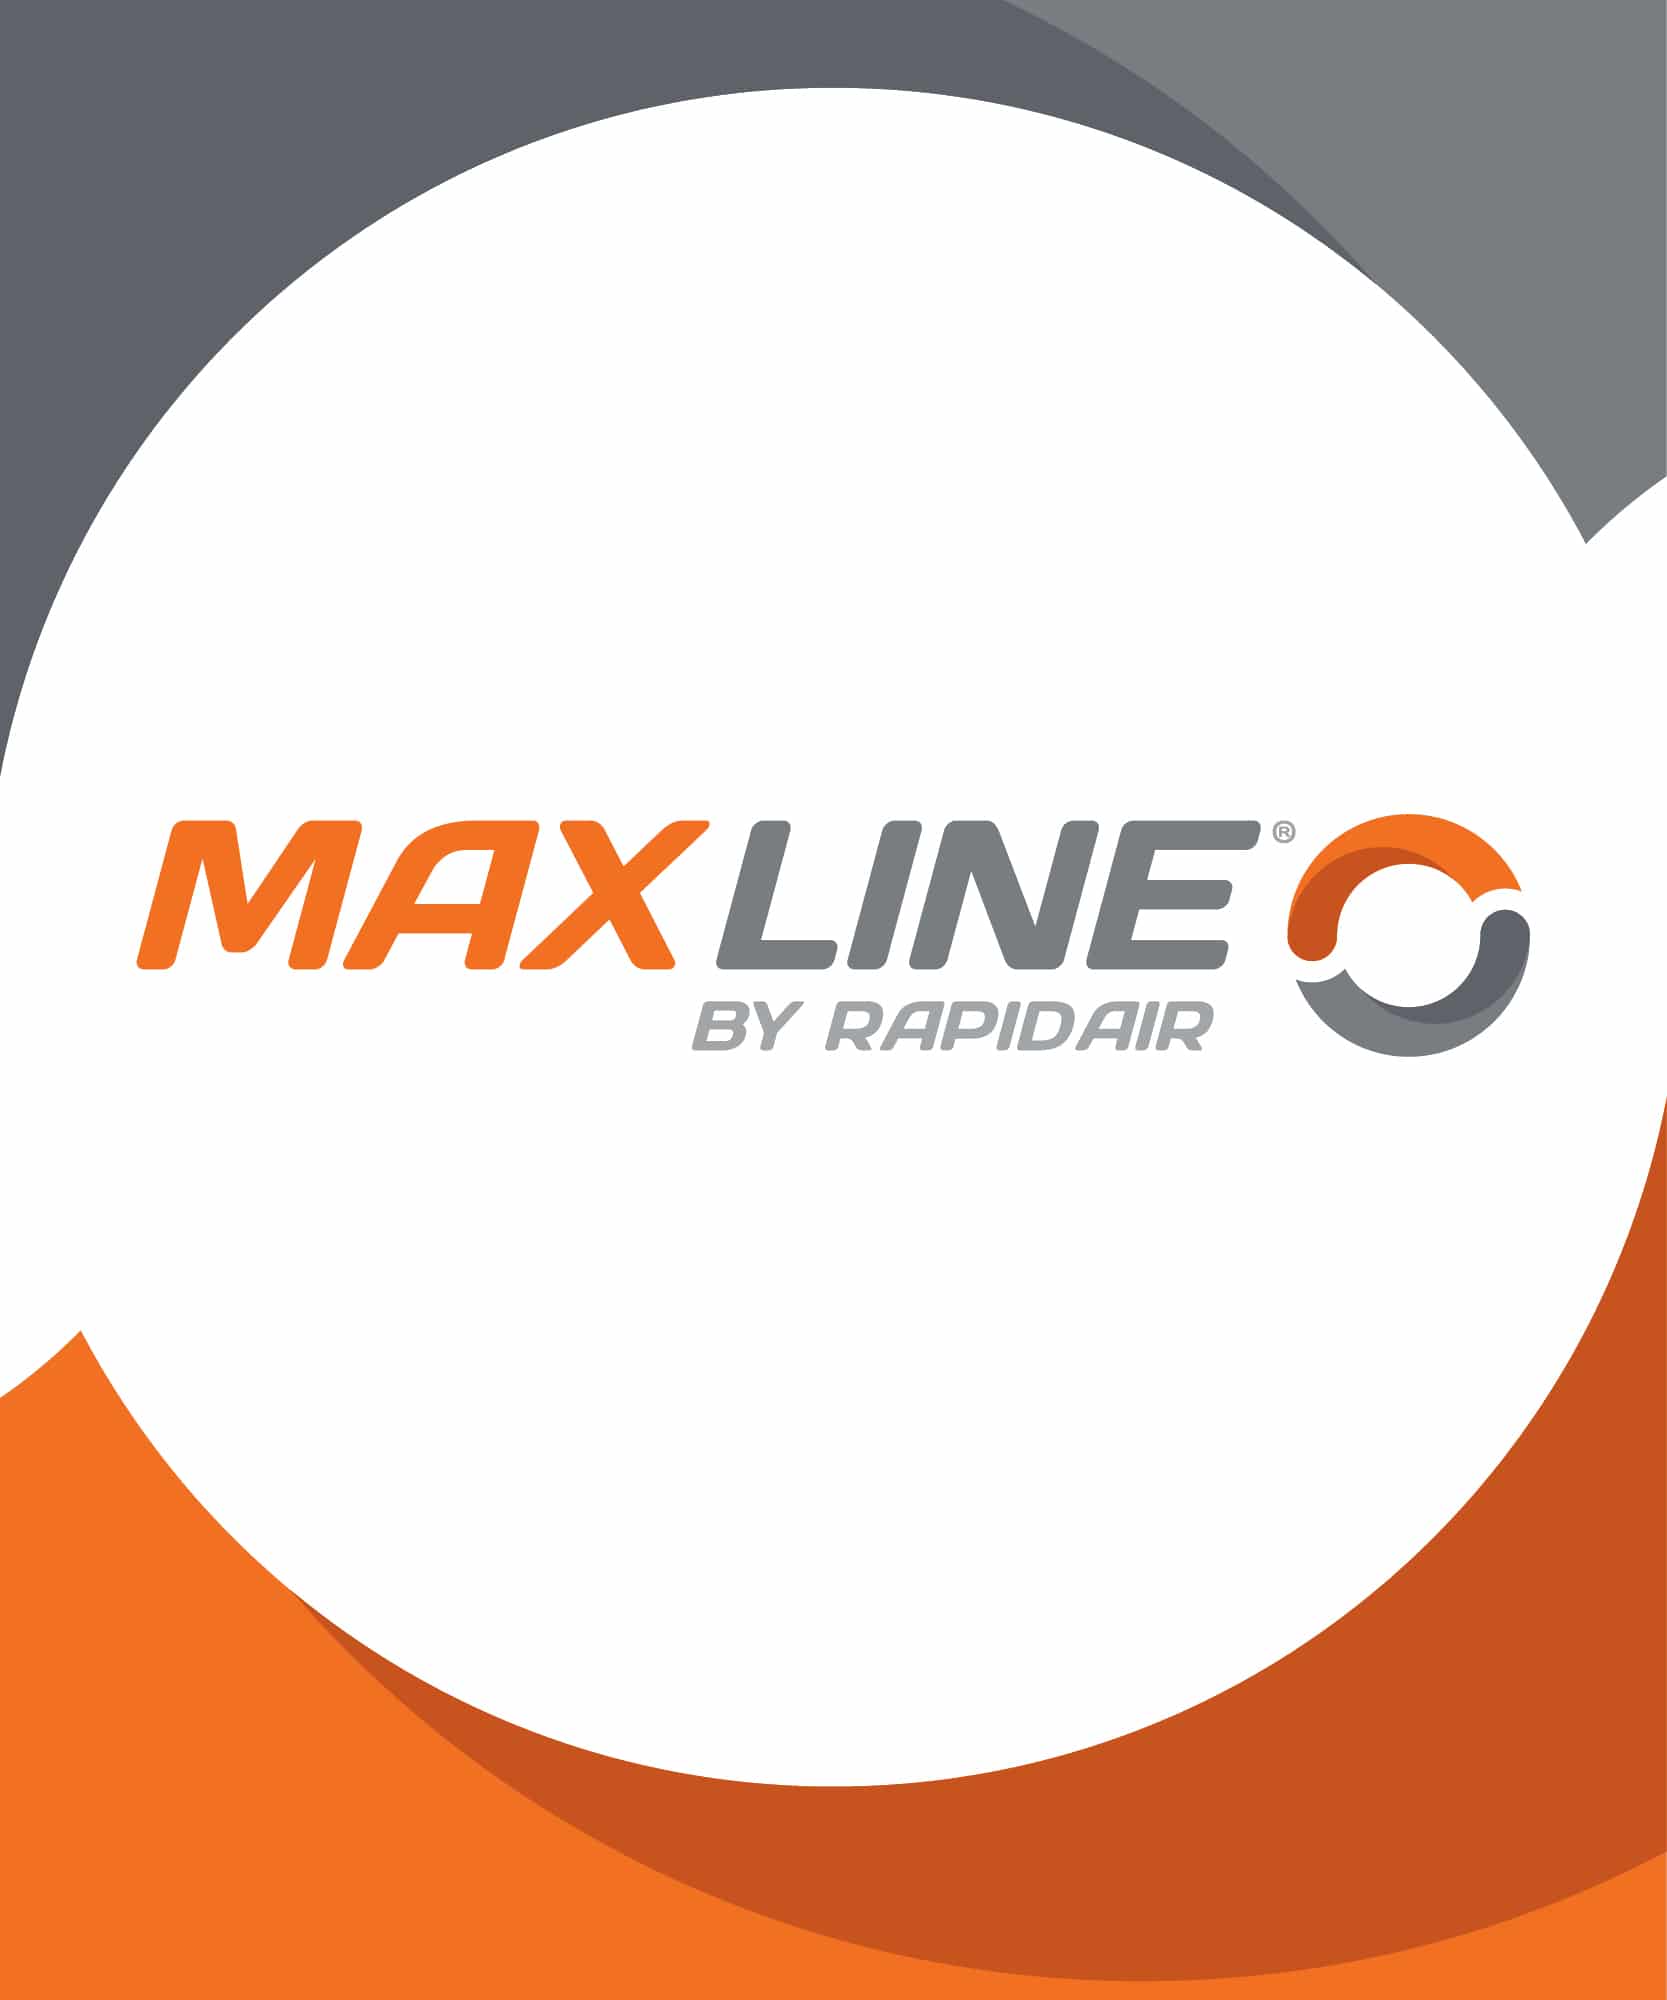 Max Line